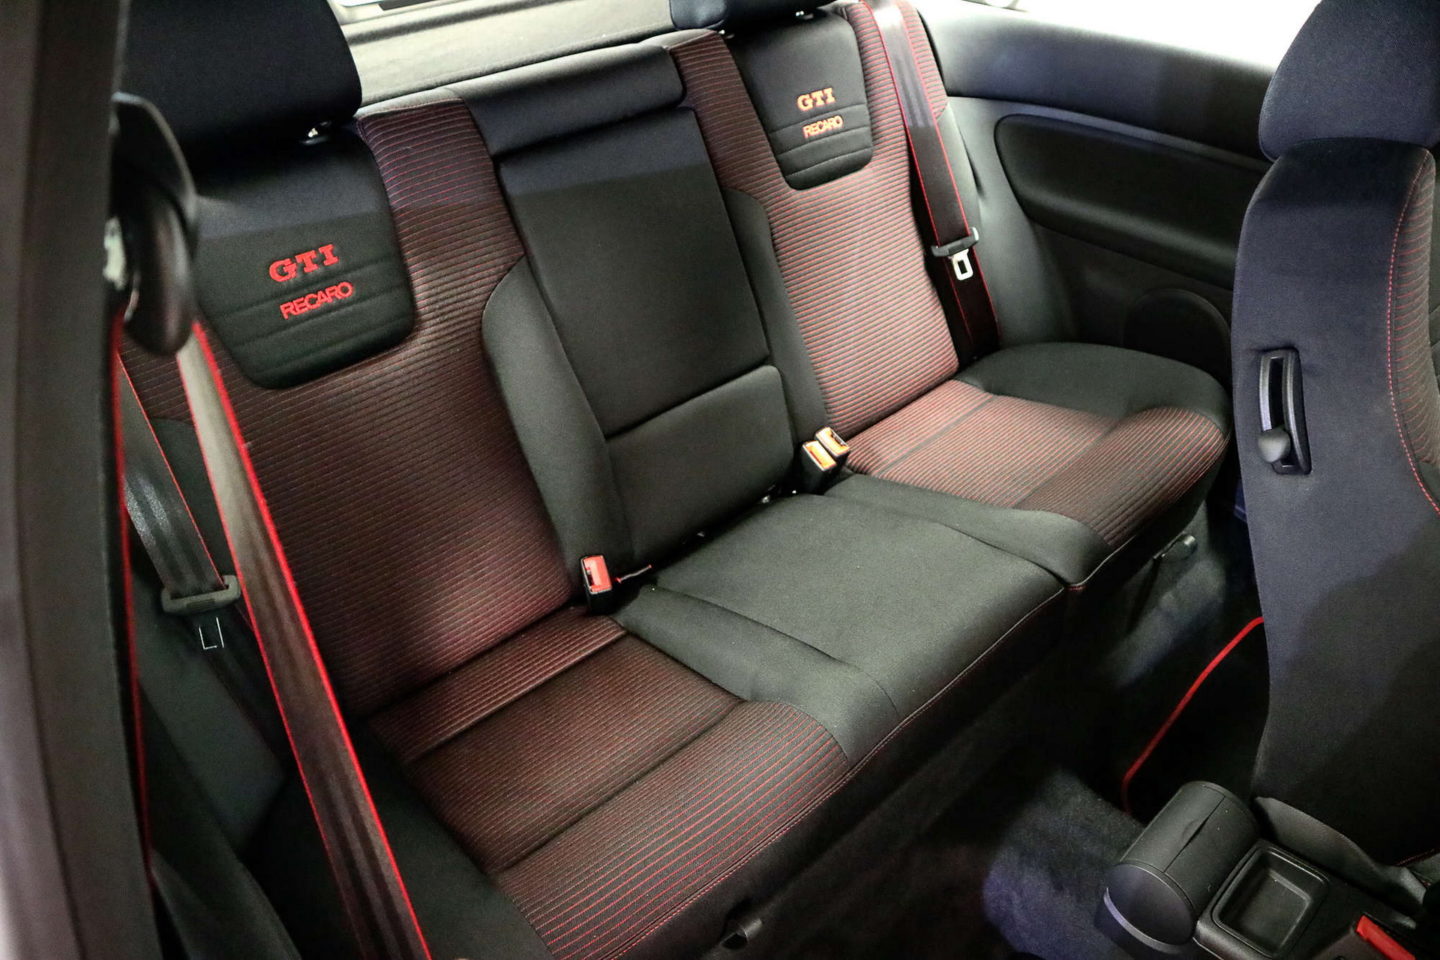 VW Golf GTI Mk4 interior